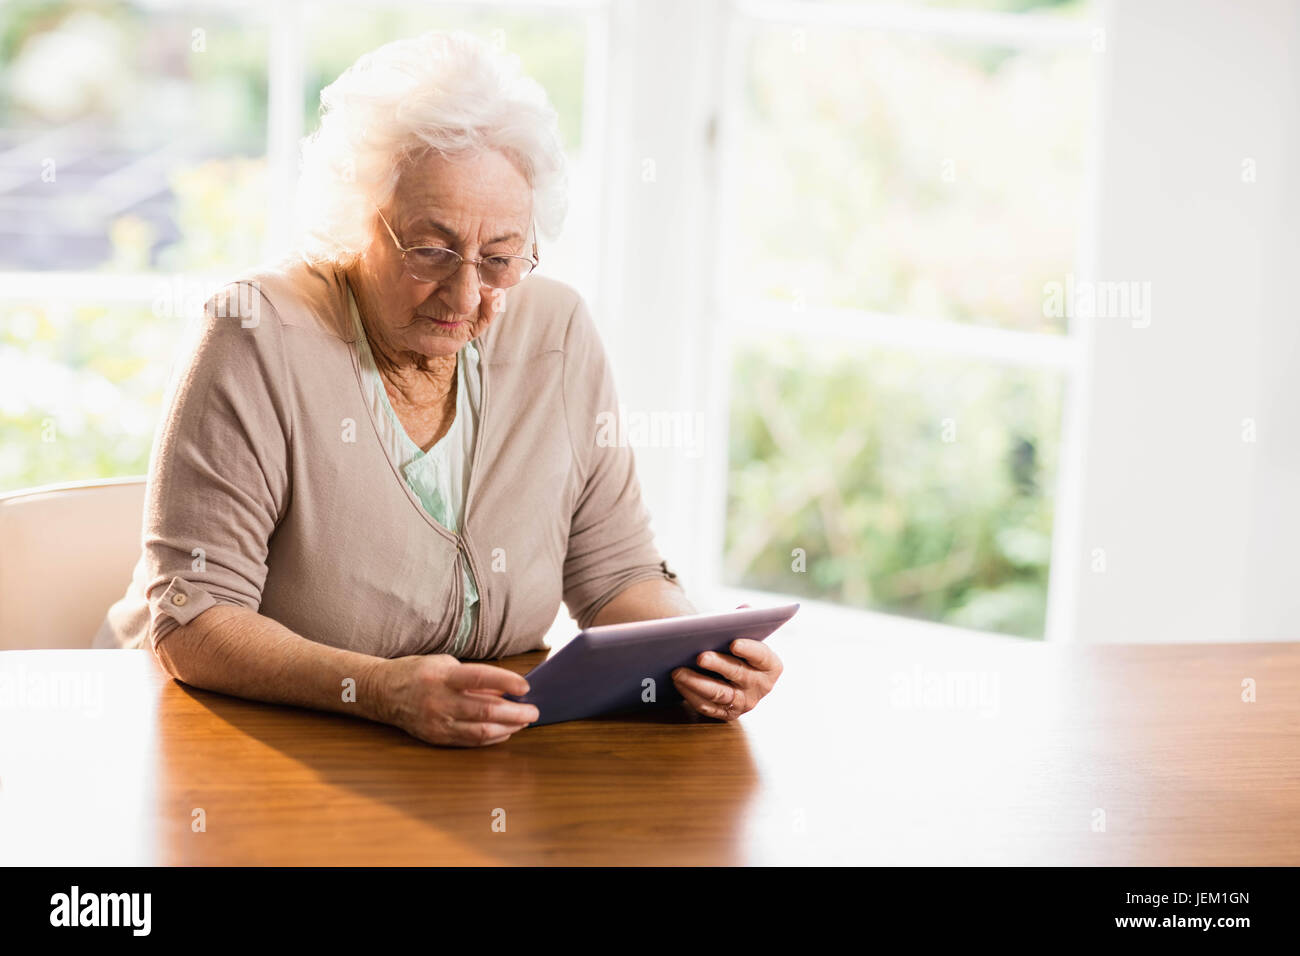 Focused senior woman using tablet Stock Photo